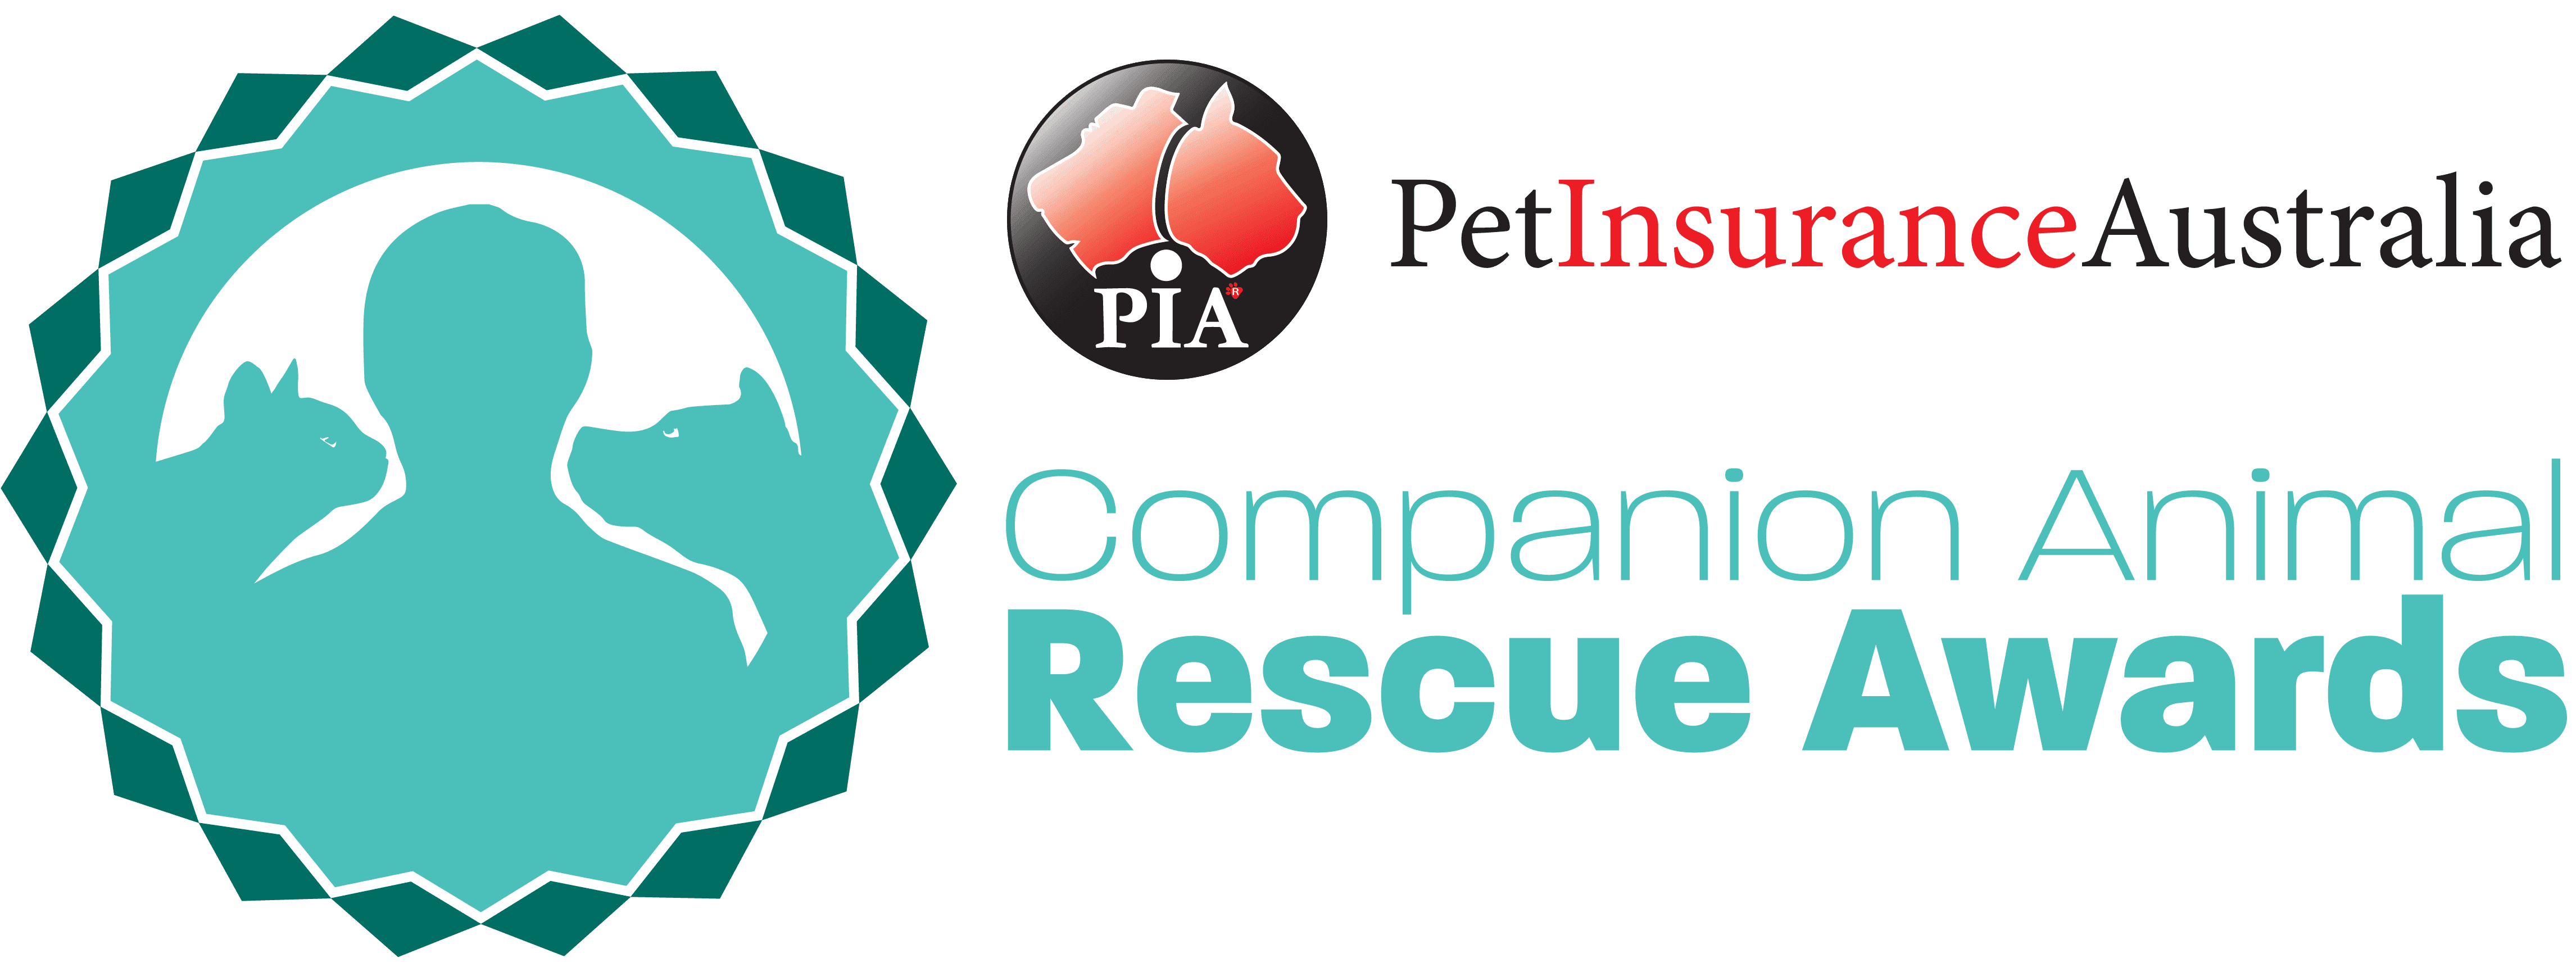 indre Ti år Okklusion Image Gallery - Pet Insurance Australia Companion Animal Rescue Awards